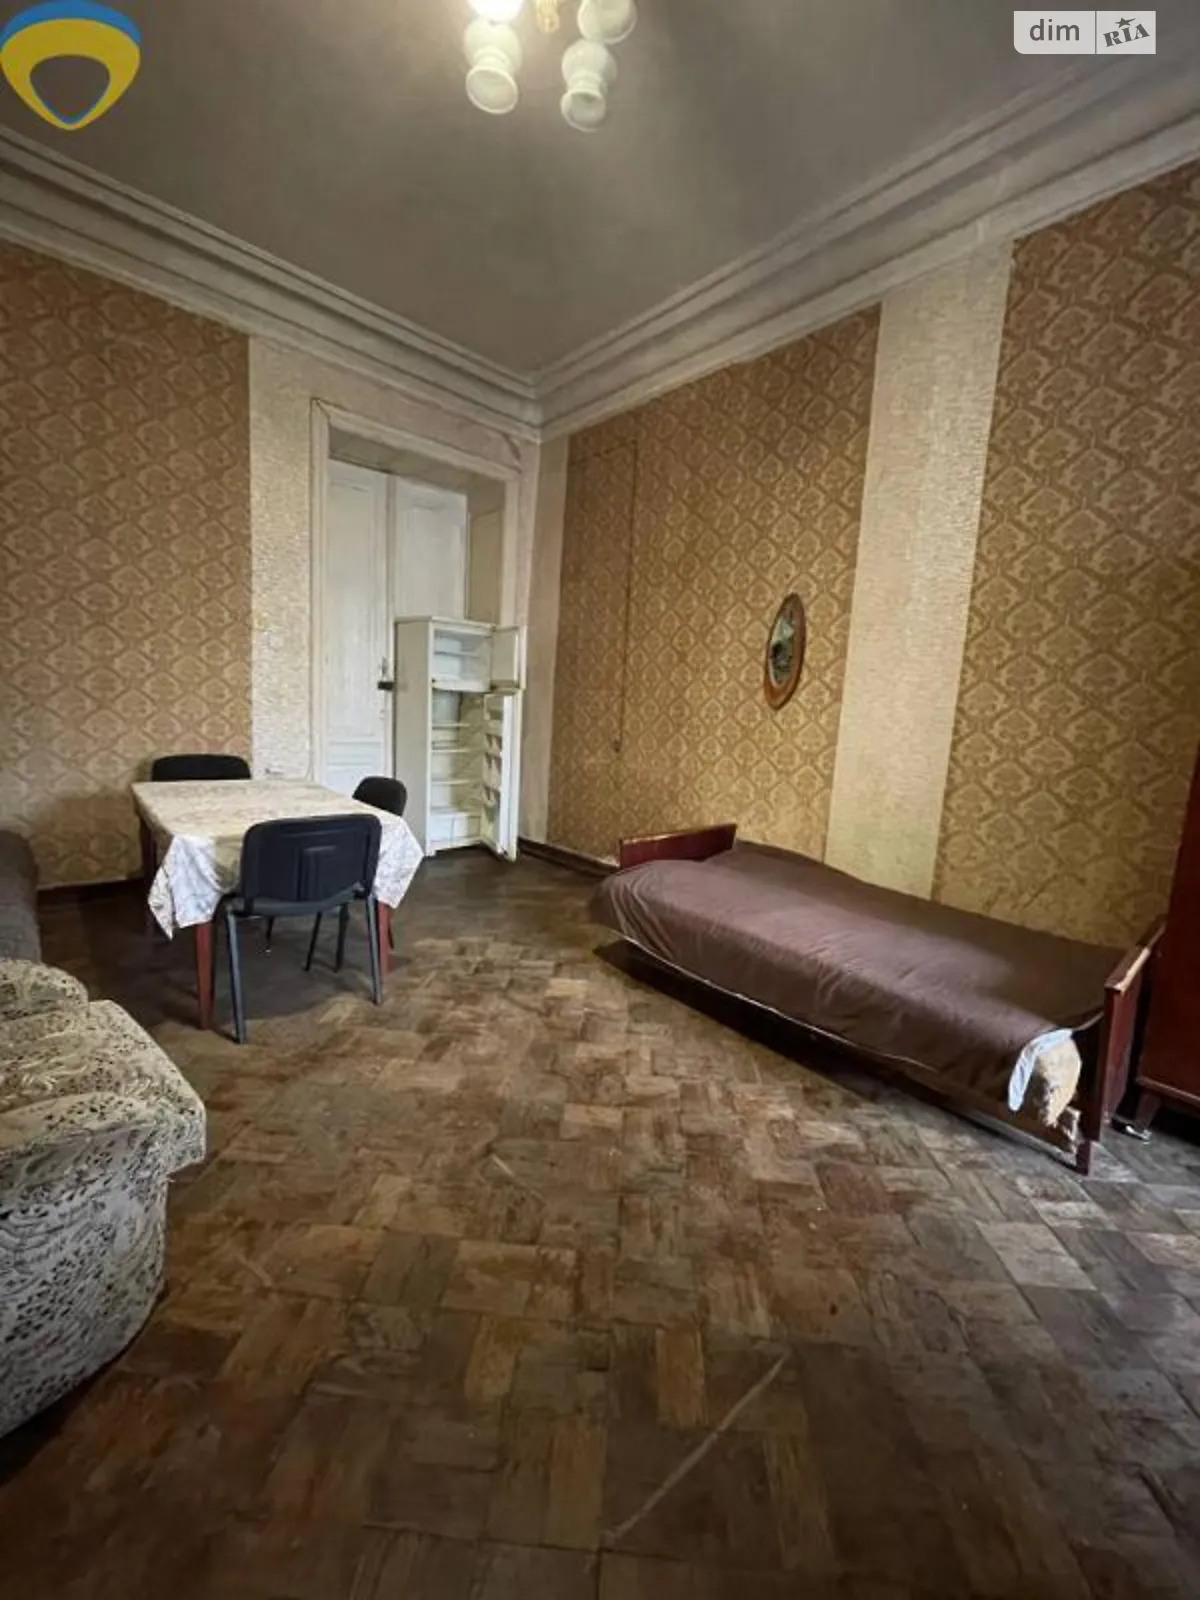 Продается комната 25 кв. м в Одессе, цена: 12000 $ - фото 1